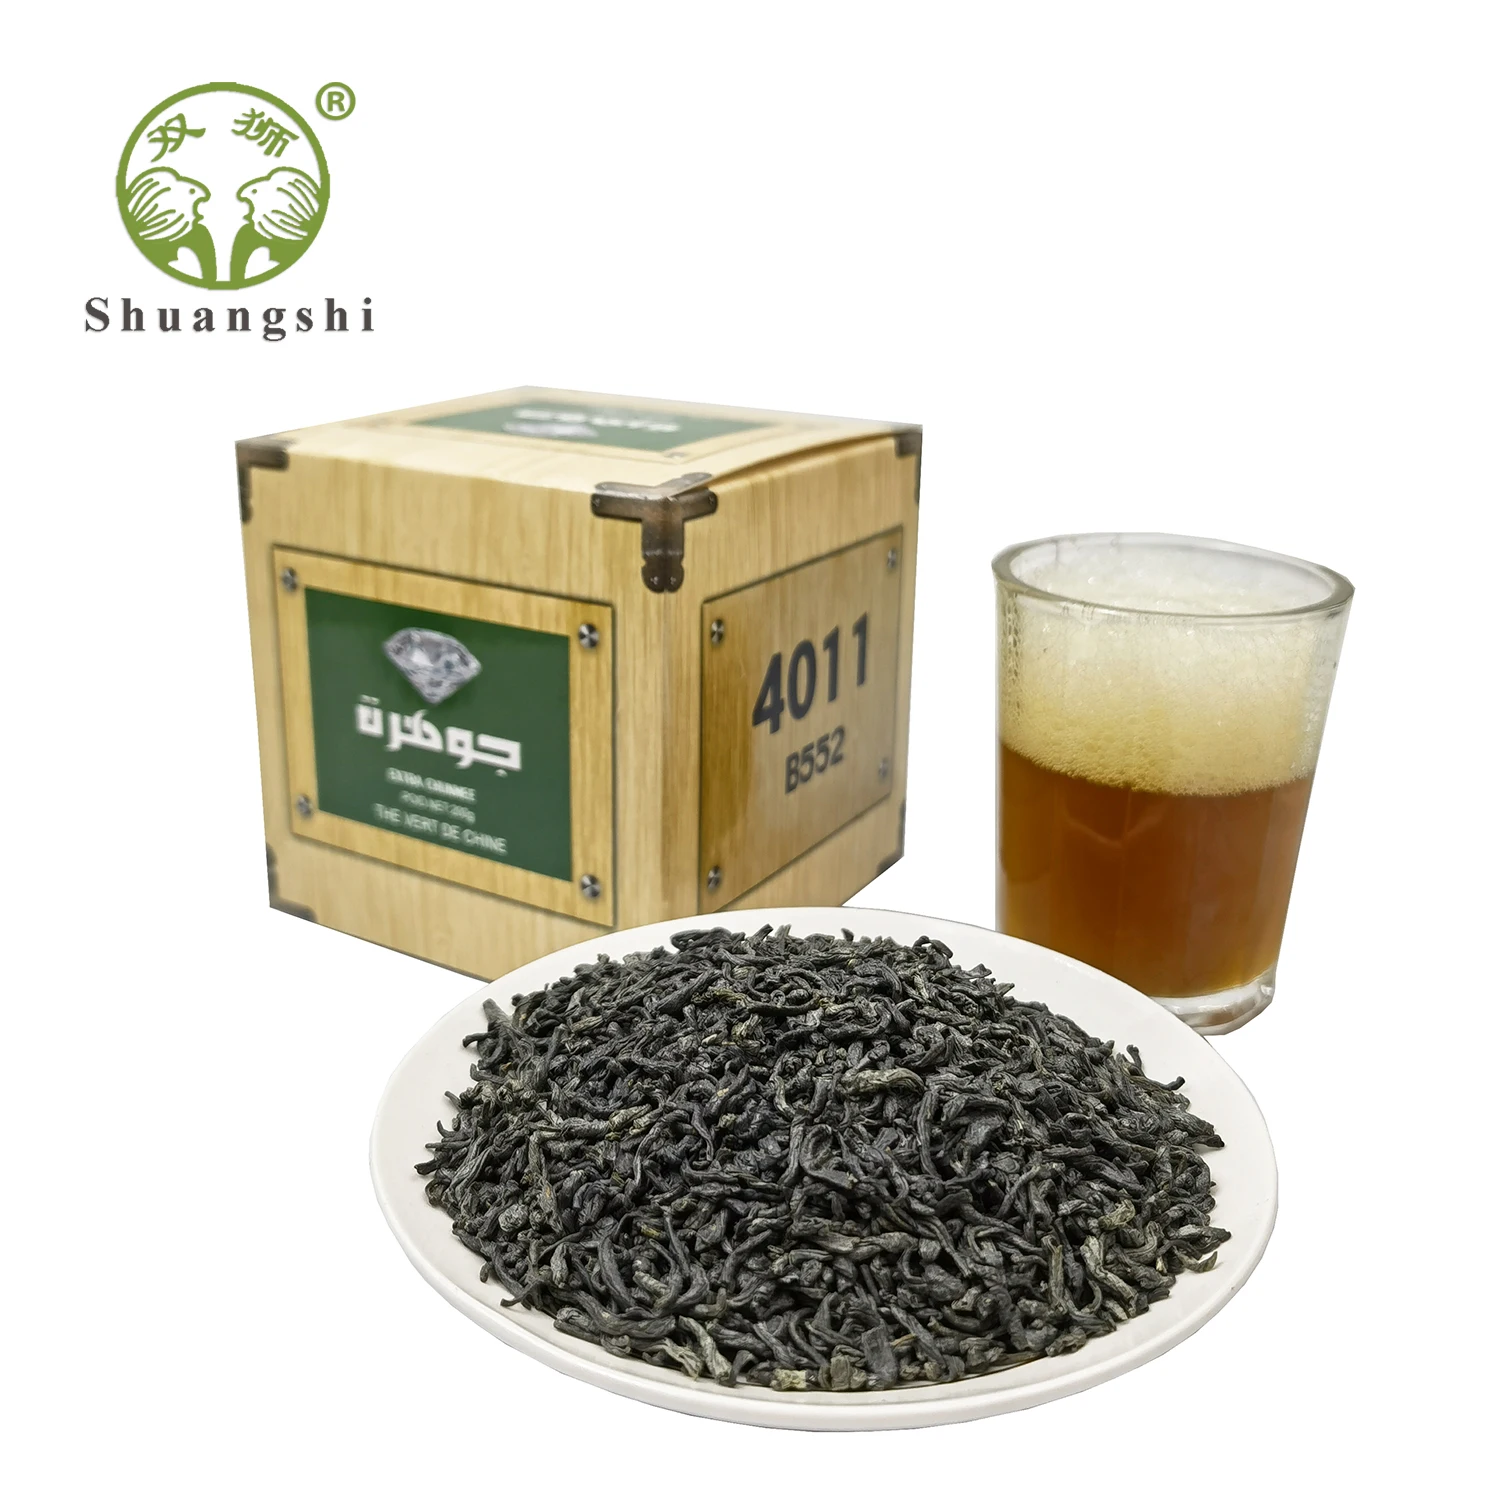 Qualite azawad health benefits chunmee green tea 4011 from China tea factory (1600462916746)